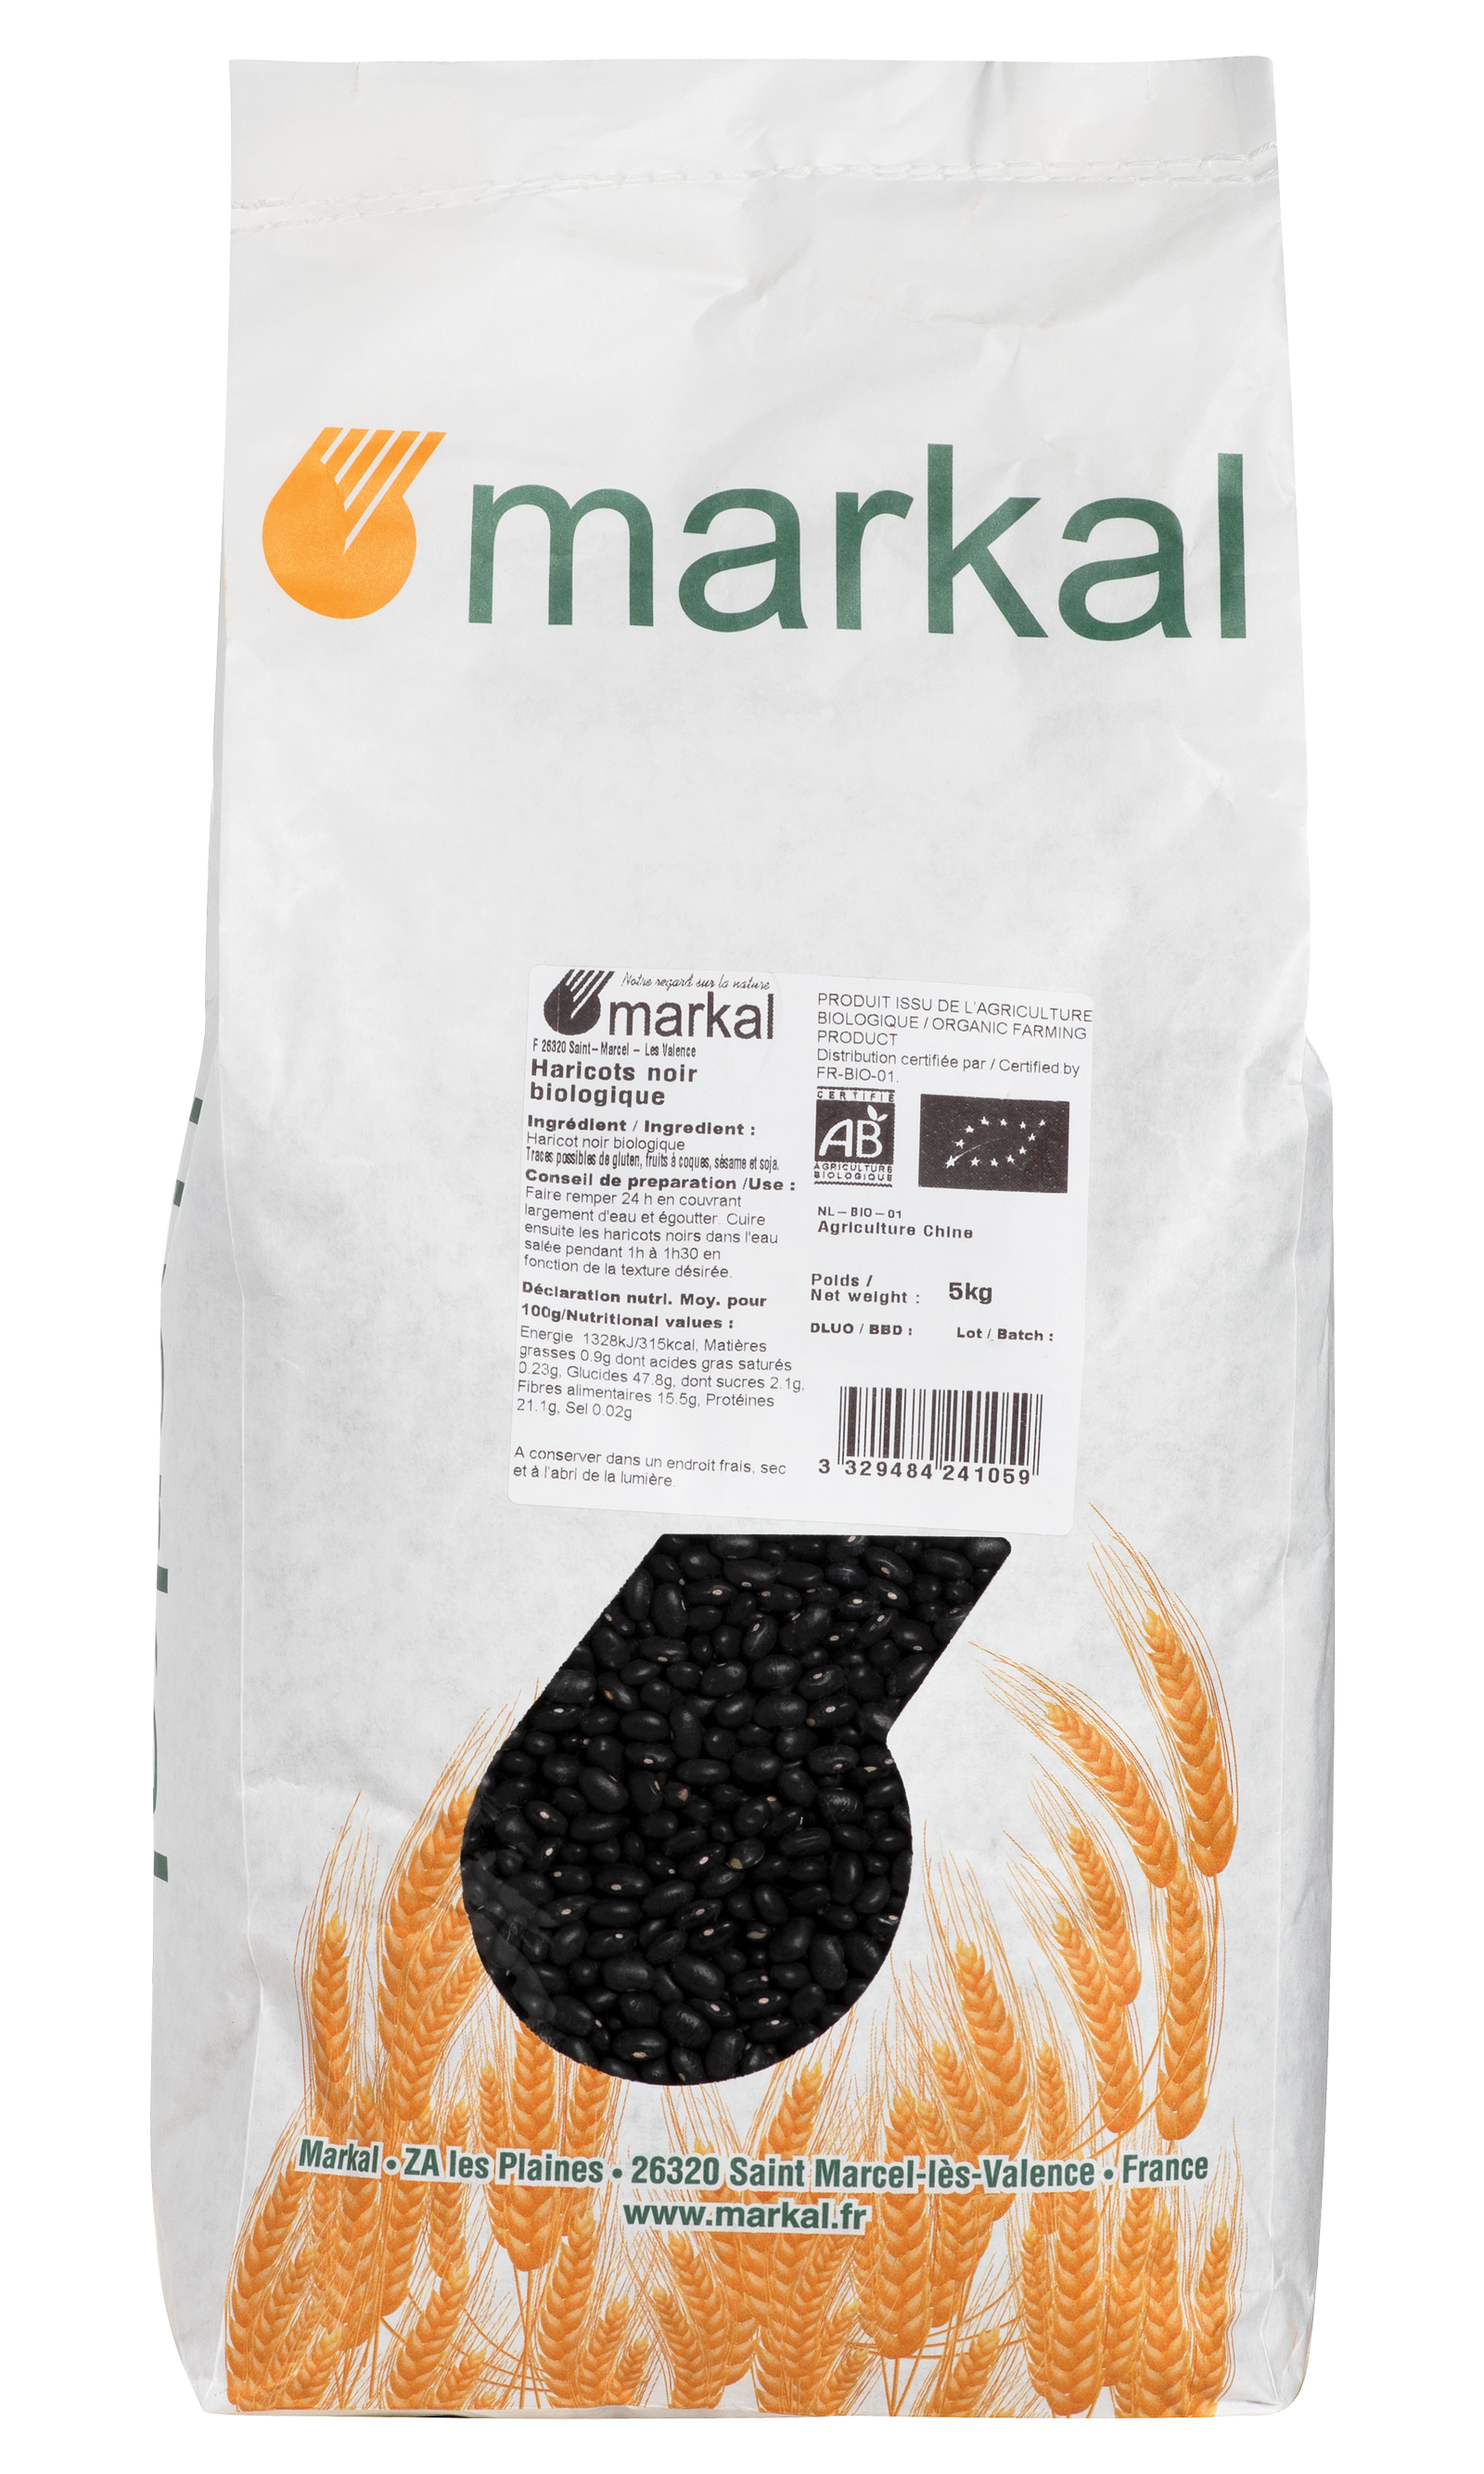 Haricots noirs bio - Markal